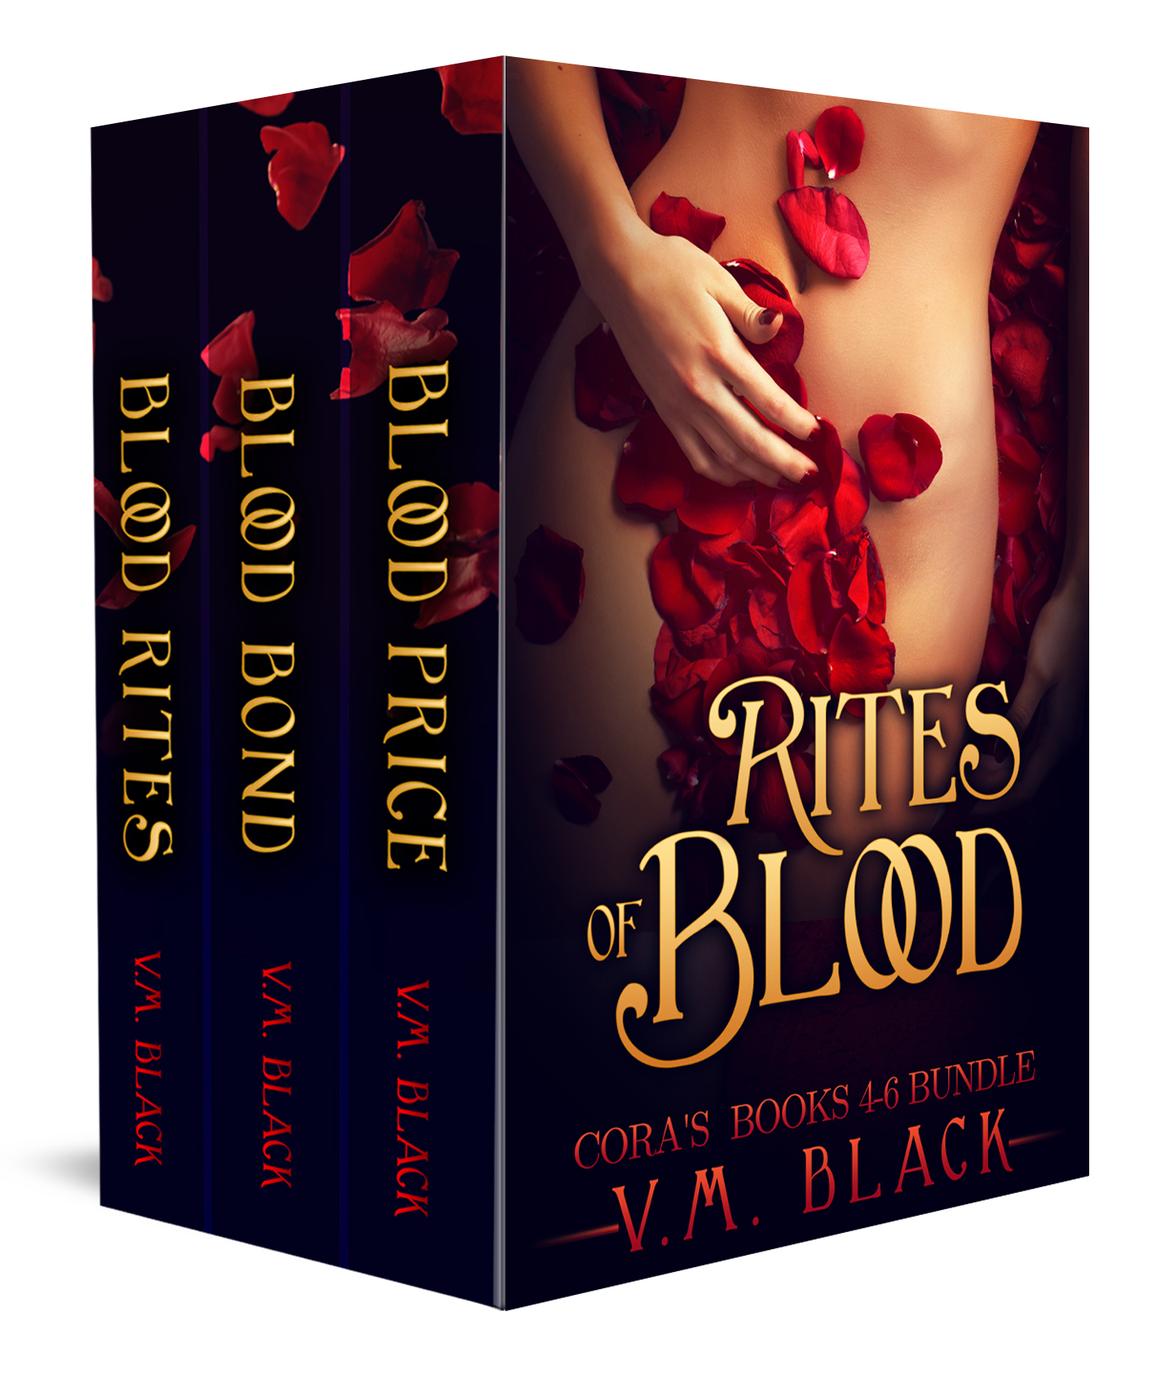 Rites of Blood: Cora's Choice Bunble 4-6 (2014)